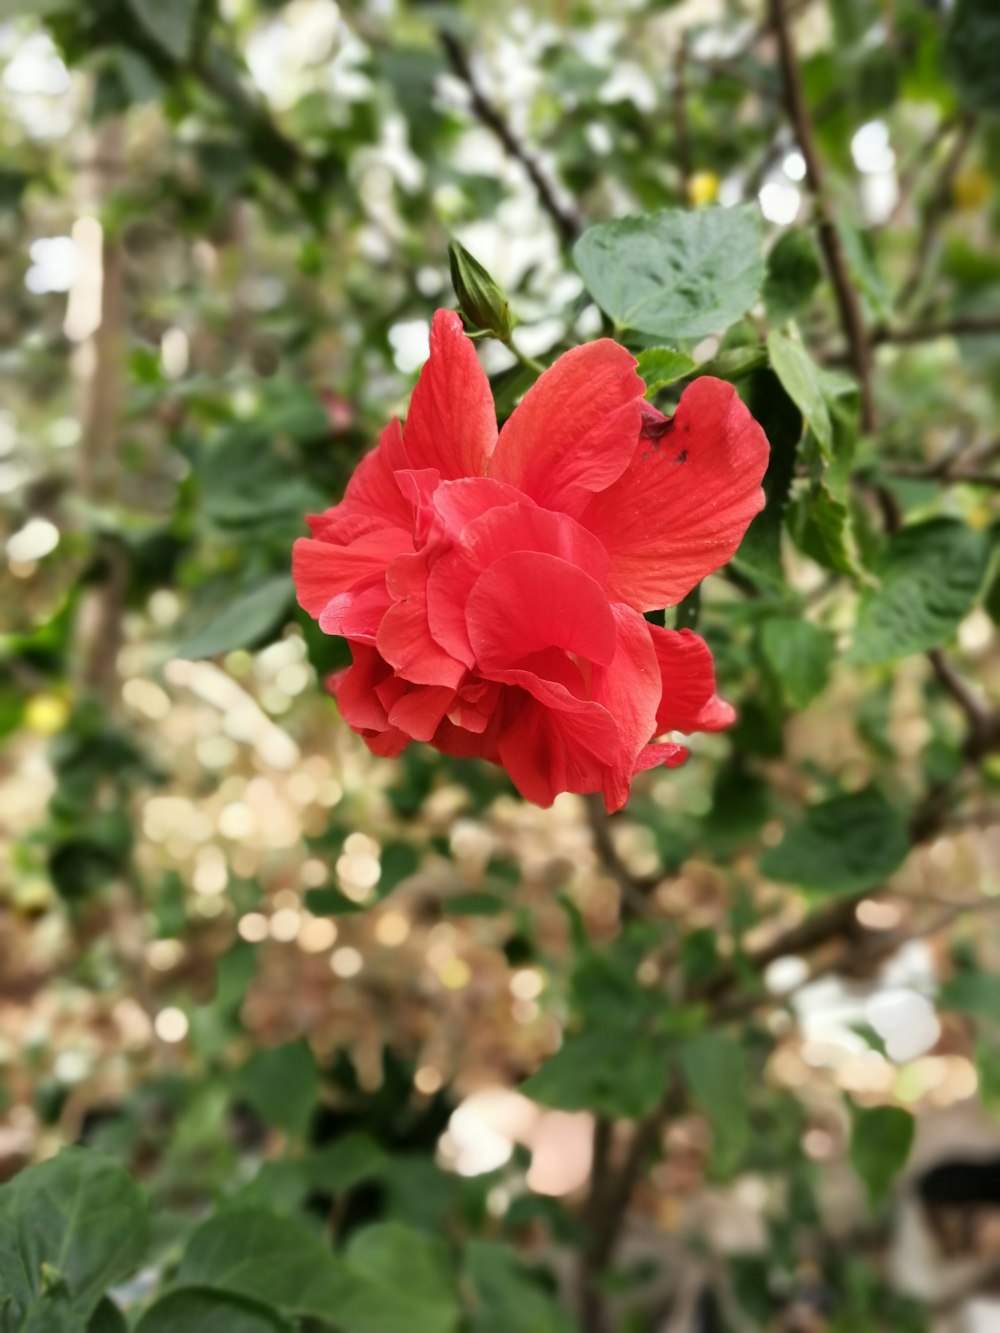 red petaled flower in bloom during daytime